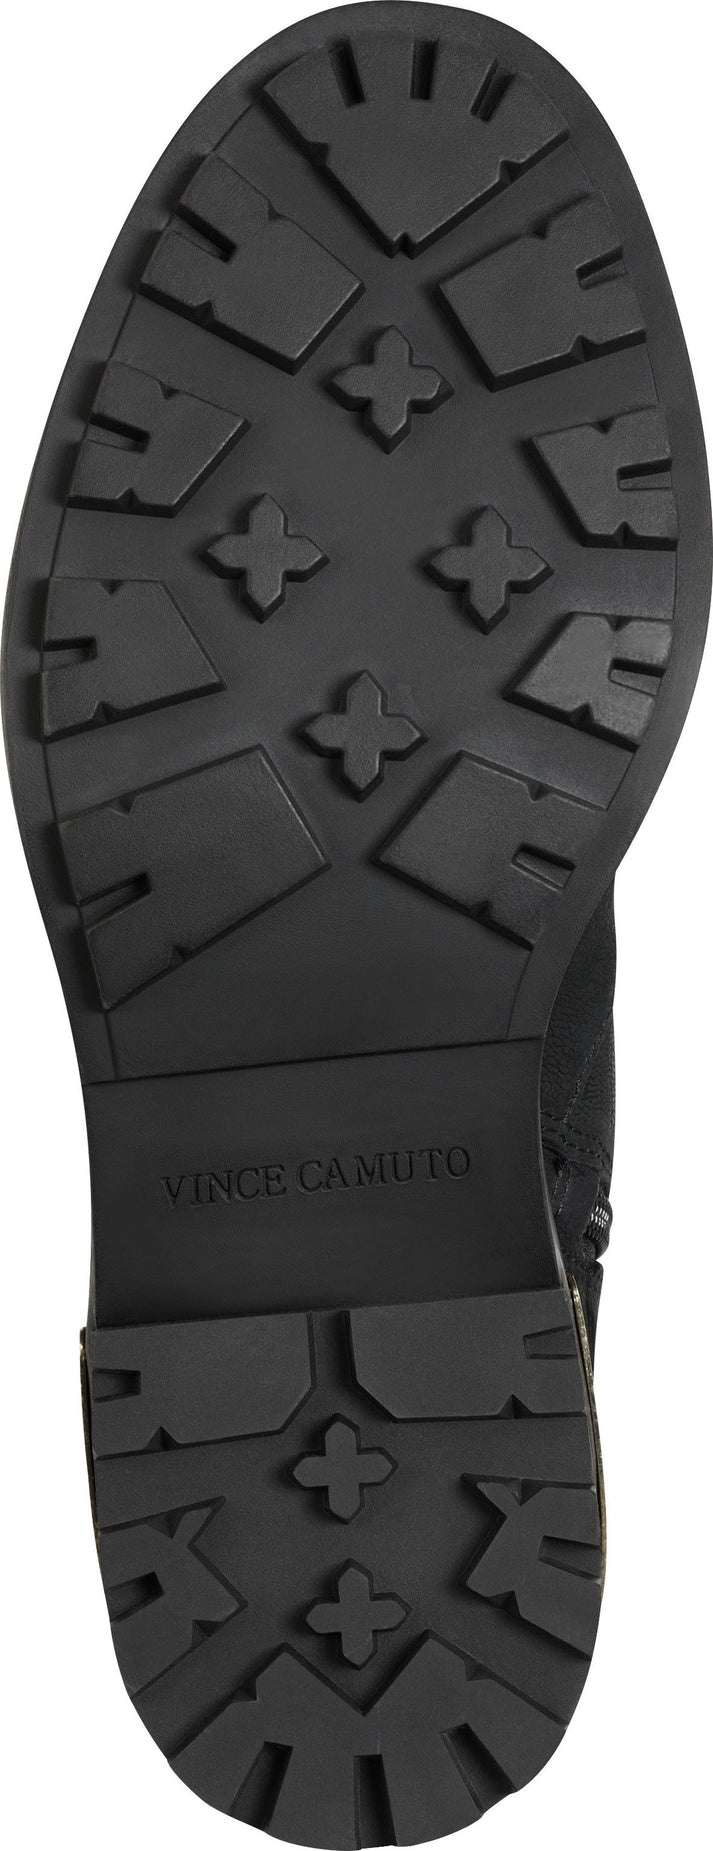 Vince Camuto Boots Kerivini Black